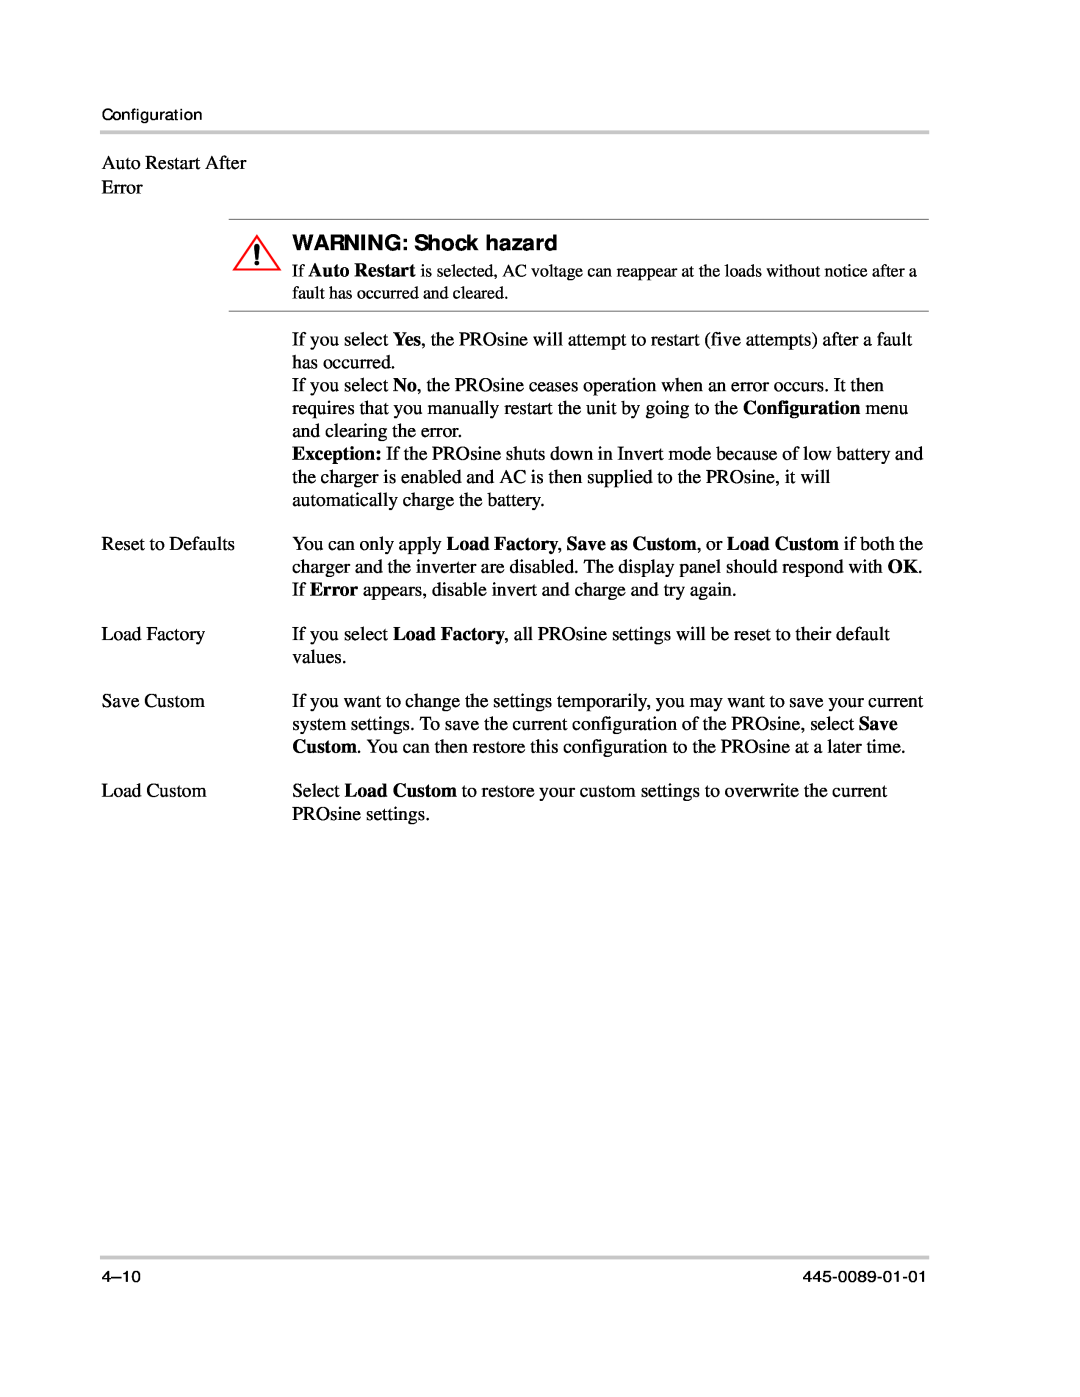 Xantrex Technology PROsine 2.0 user manual WARNING Shock hazard, Auto Restart After Error 